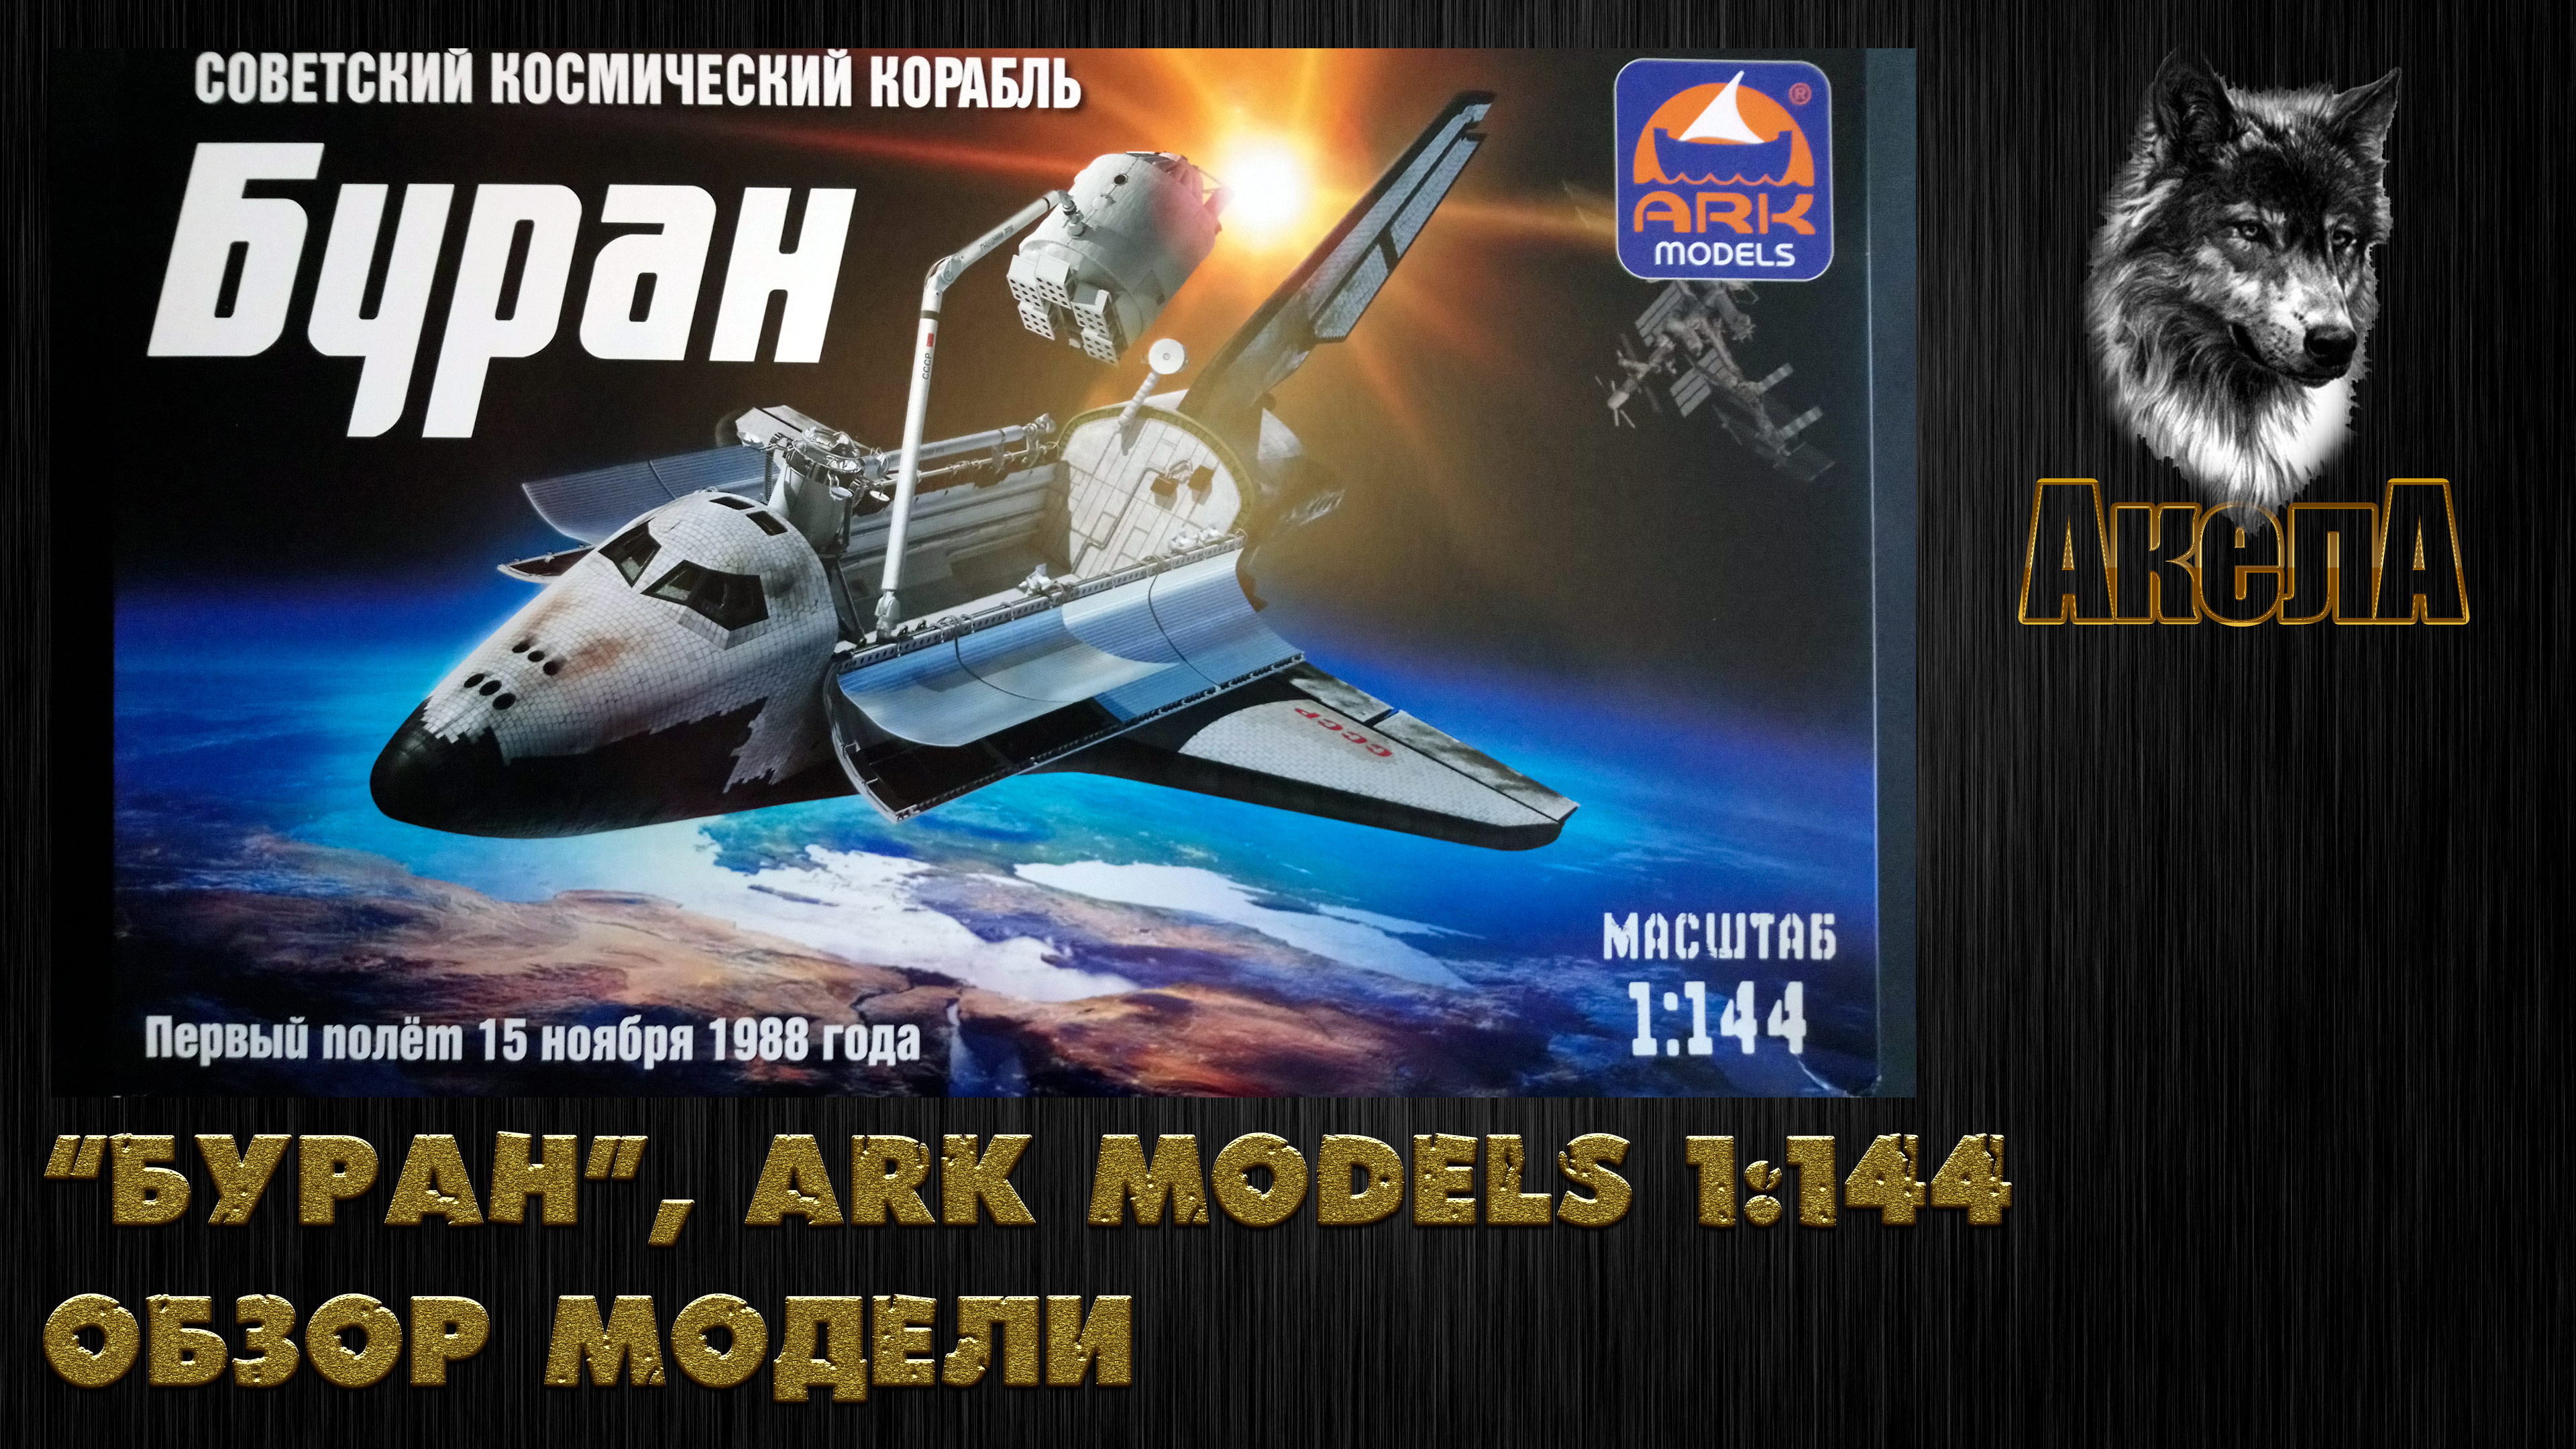 Обзор модели "Буран", Ark Models 1/144